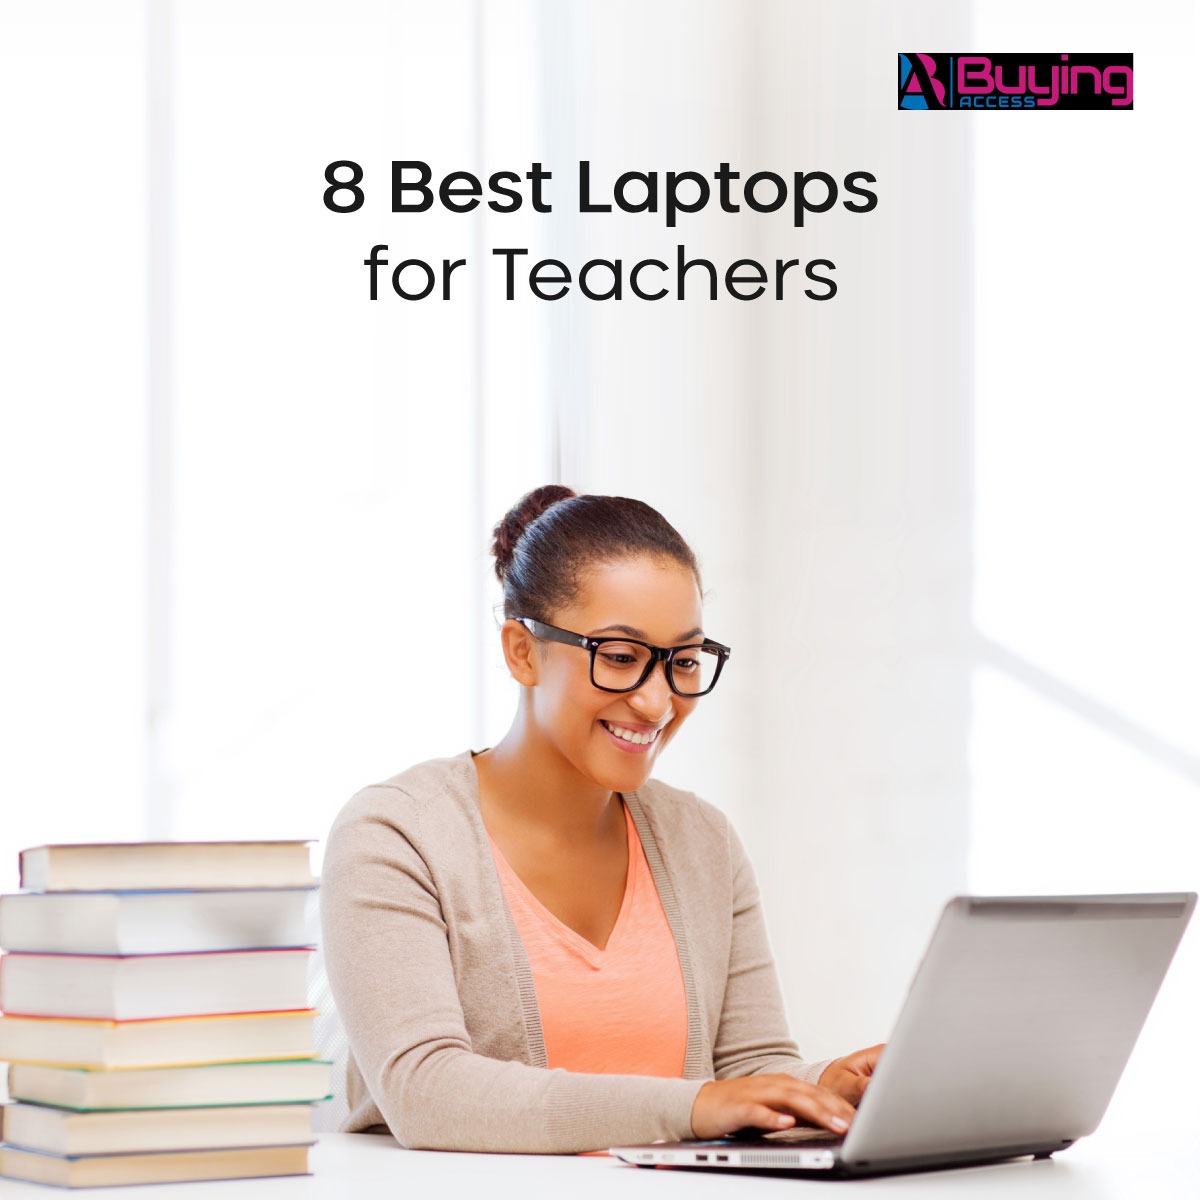 best laptop for teachers